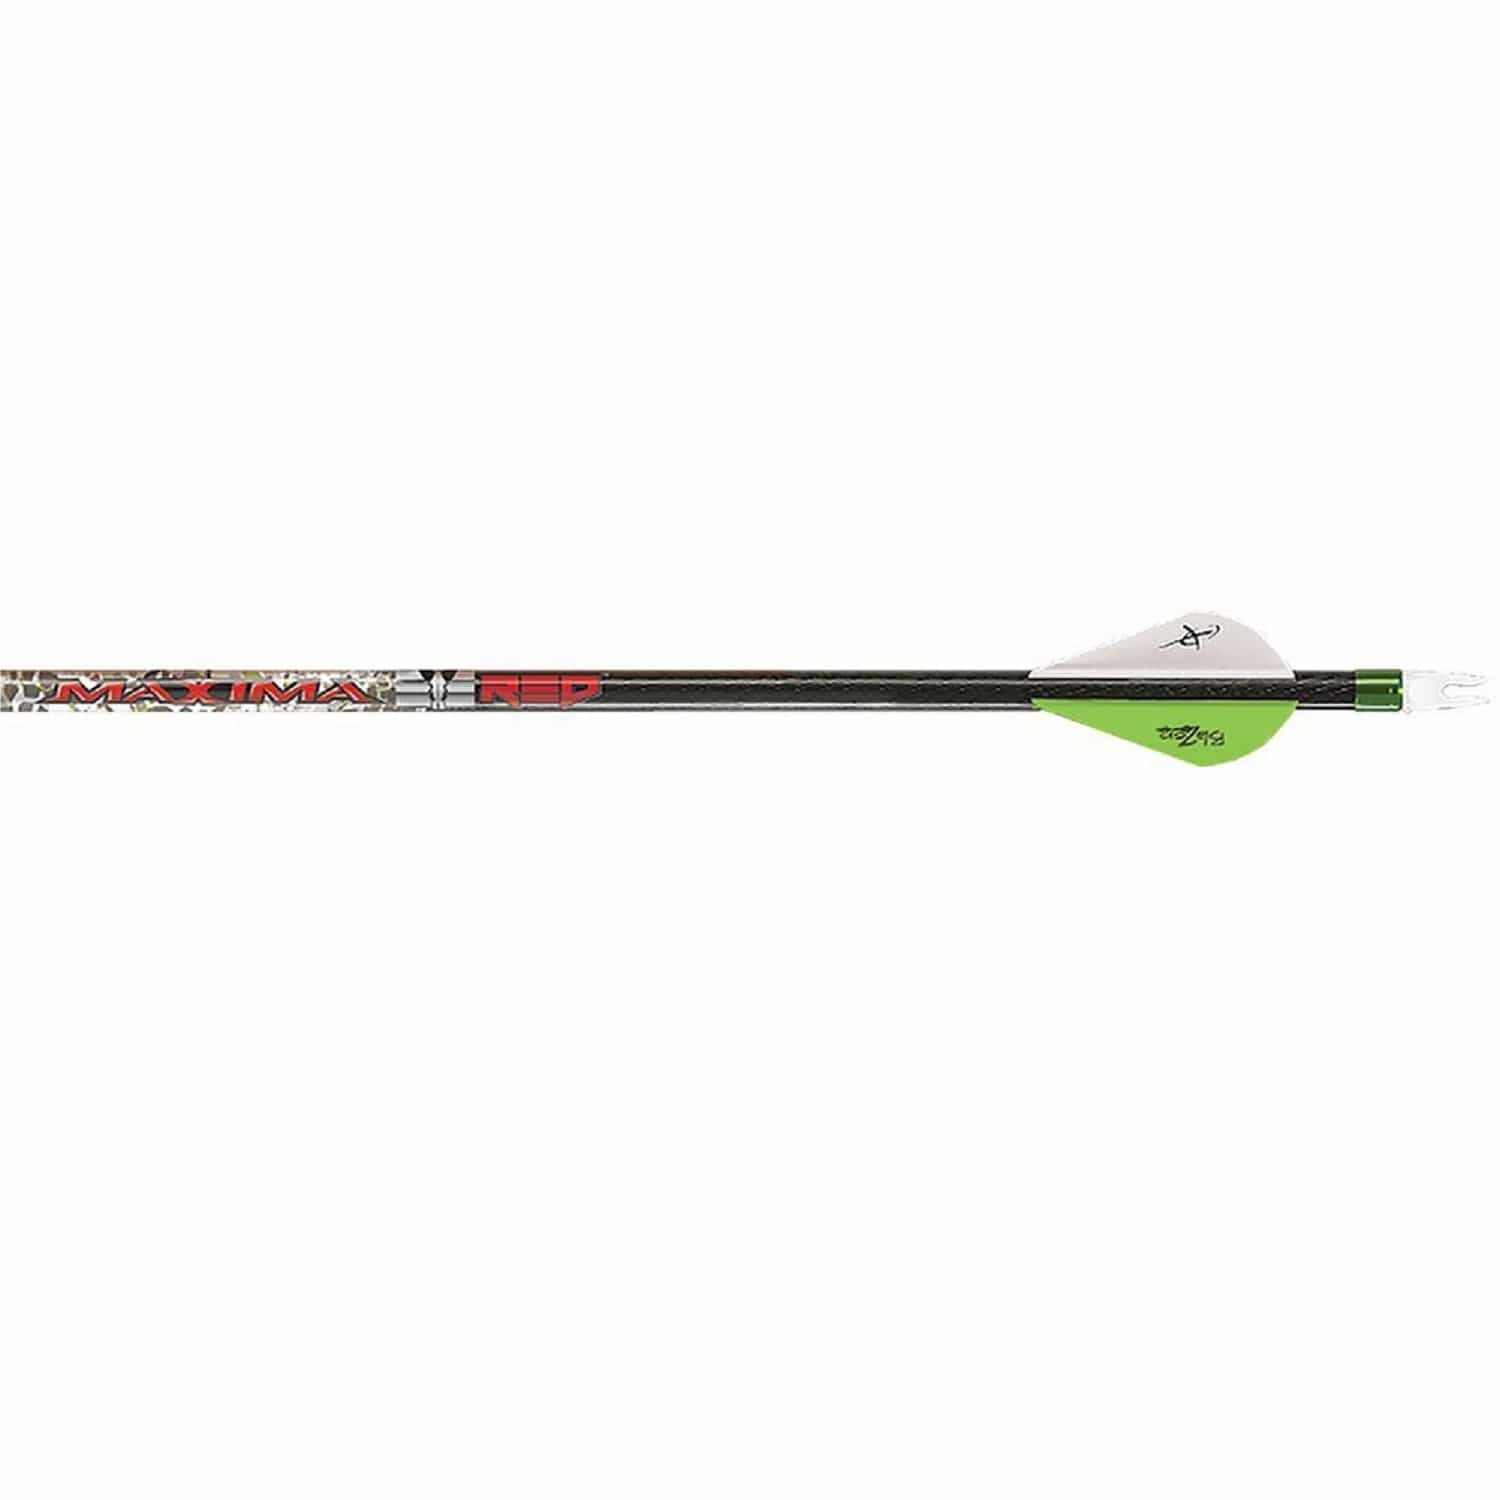 Carbon Express Archery : Arrows Carbon Express Maxima RED Badlands 350 Arrows 6Pk